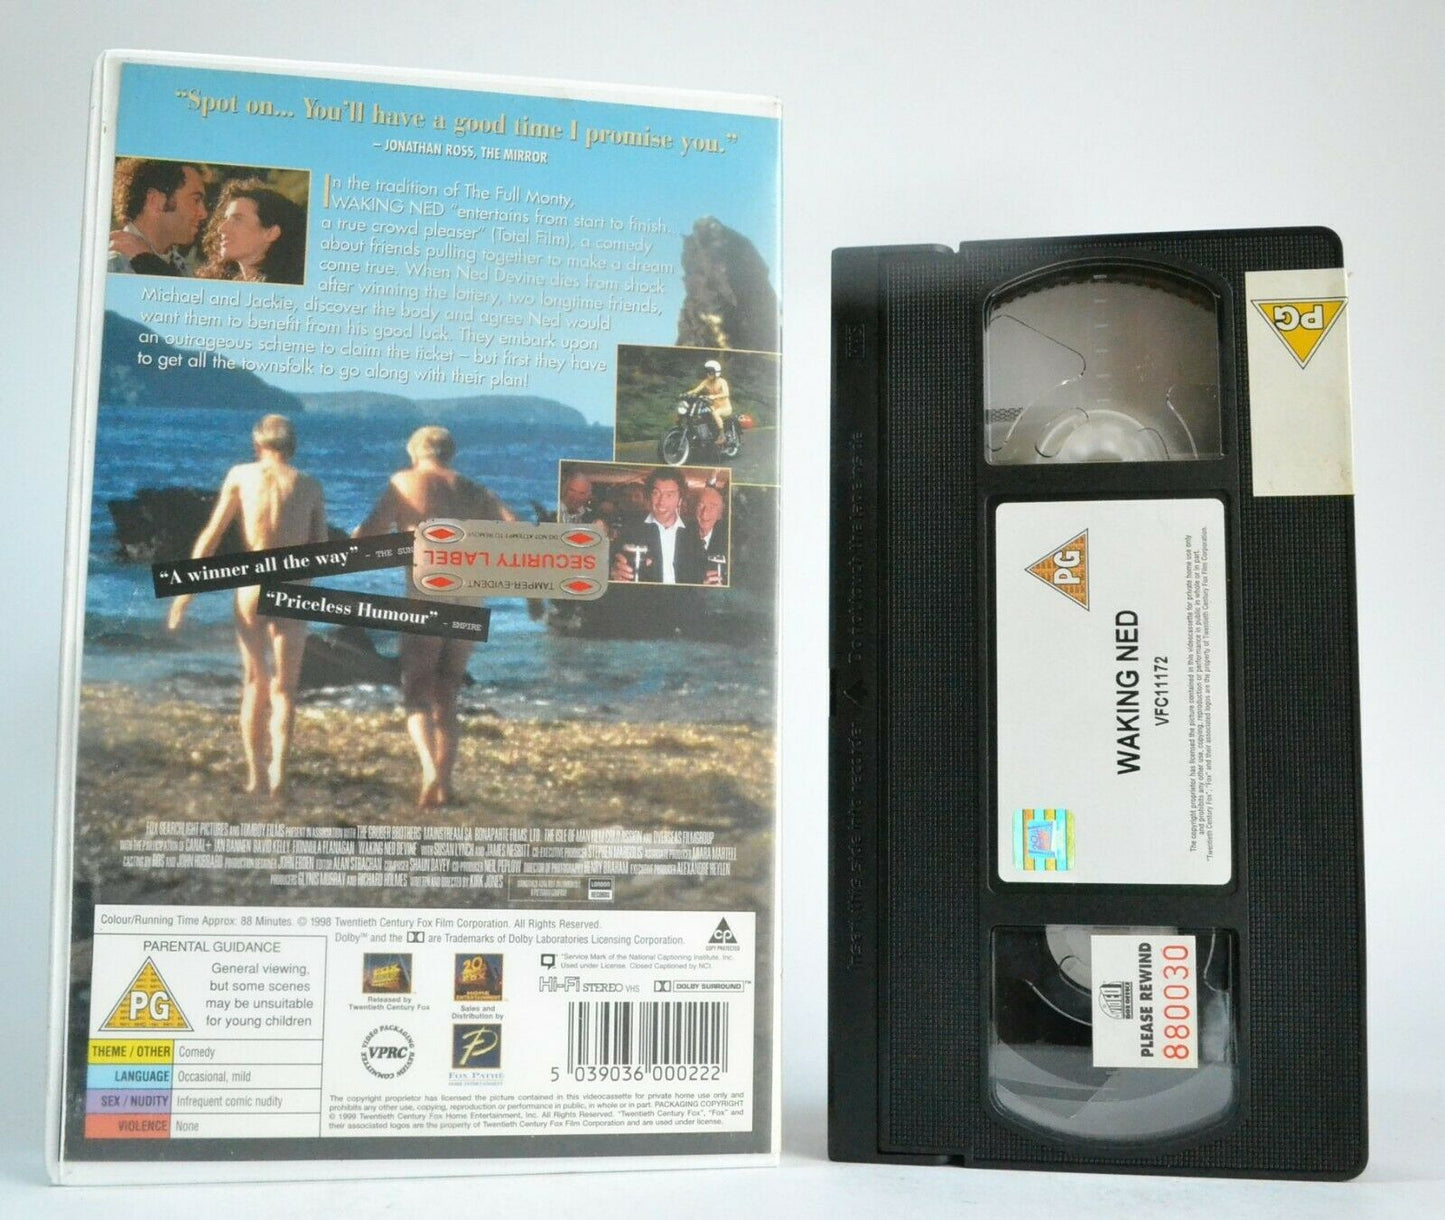 Waking Ned (1998) - British Comedy - Large Box - Ian Bannen/David Kelly - VHS-